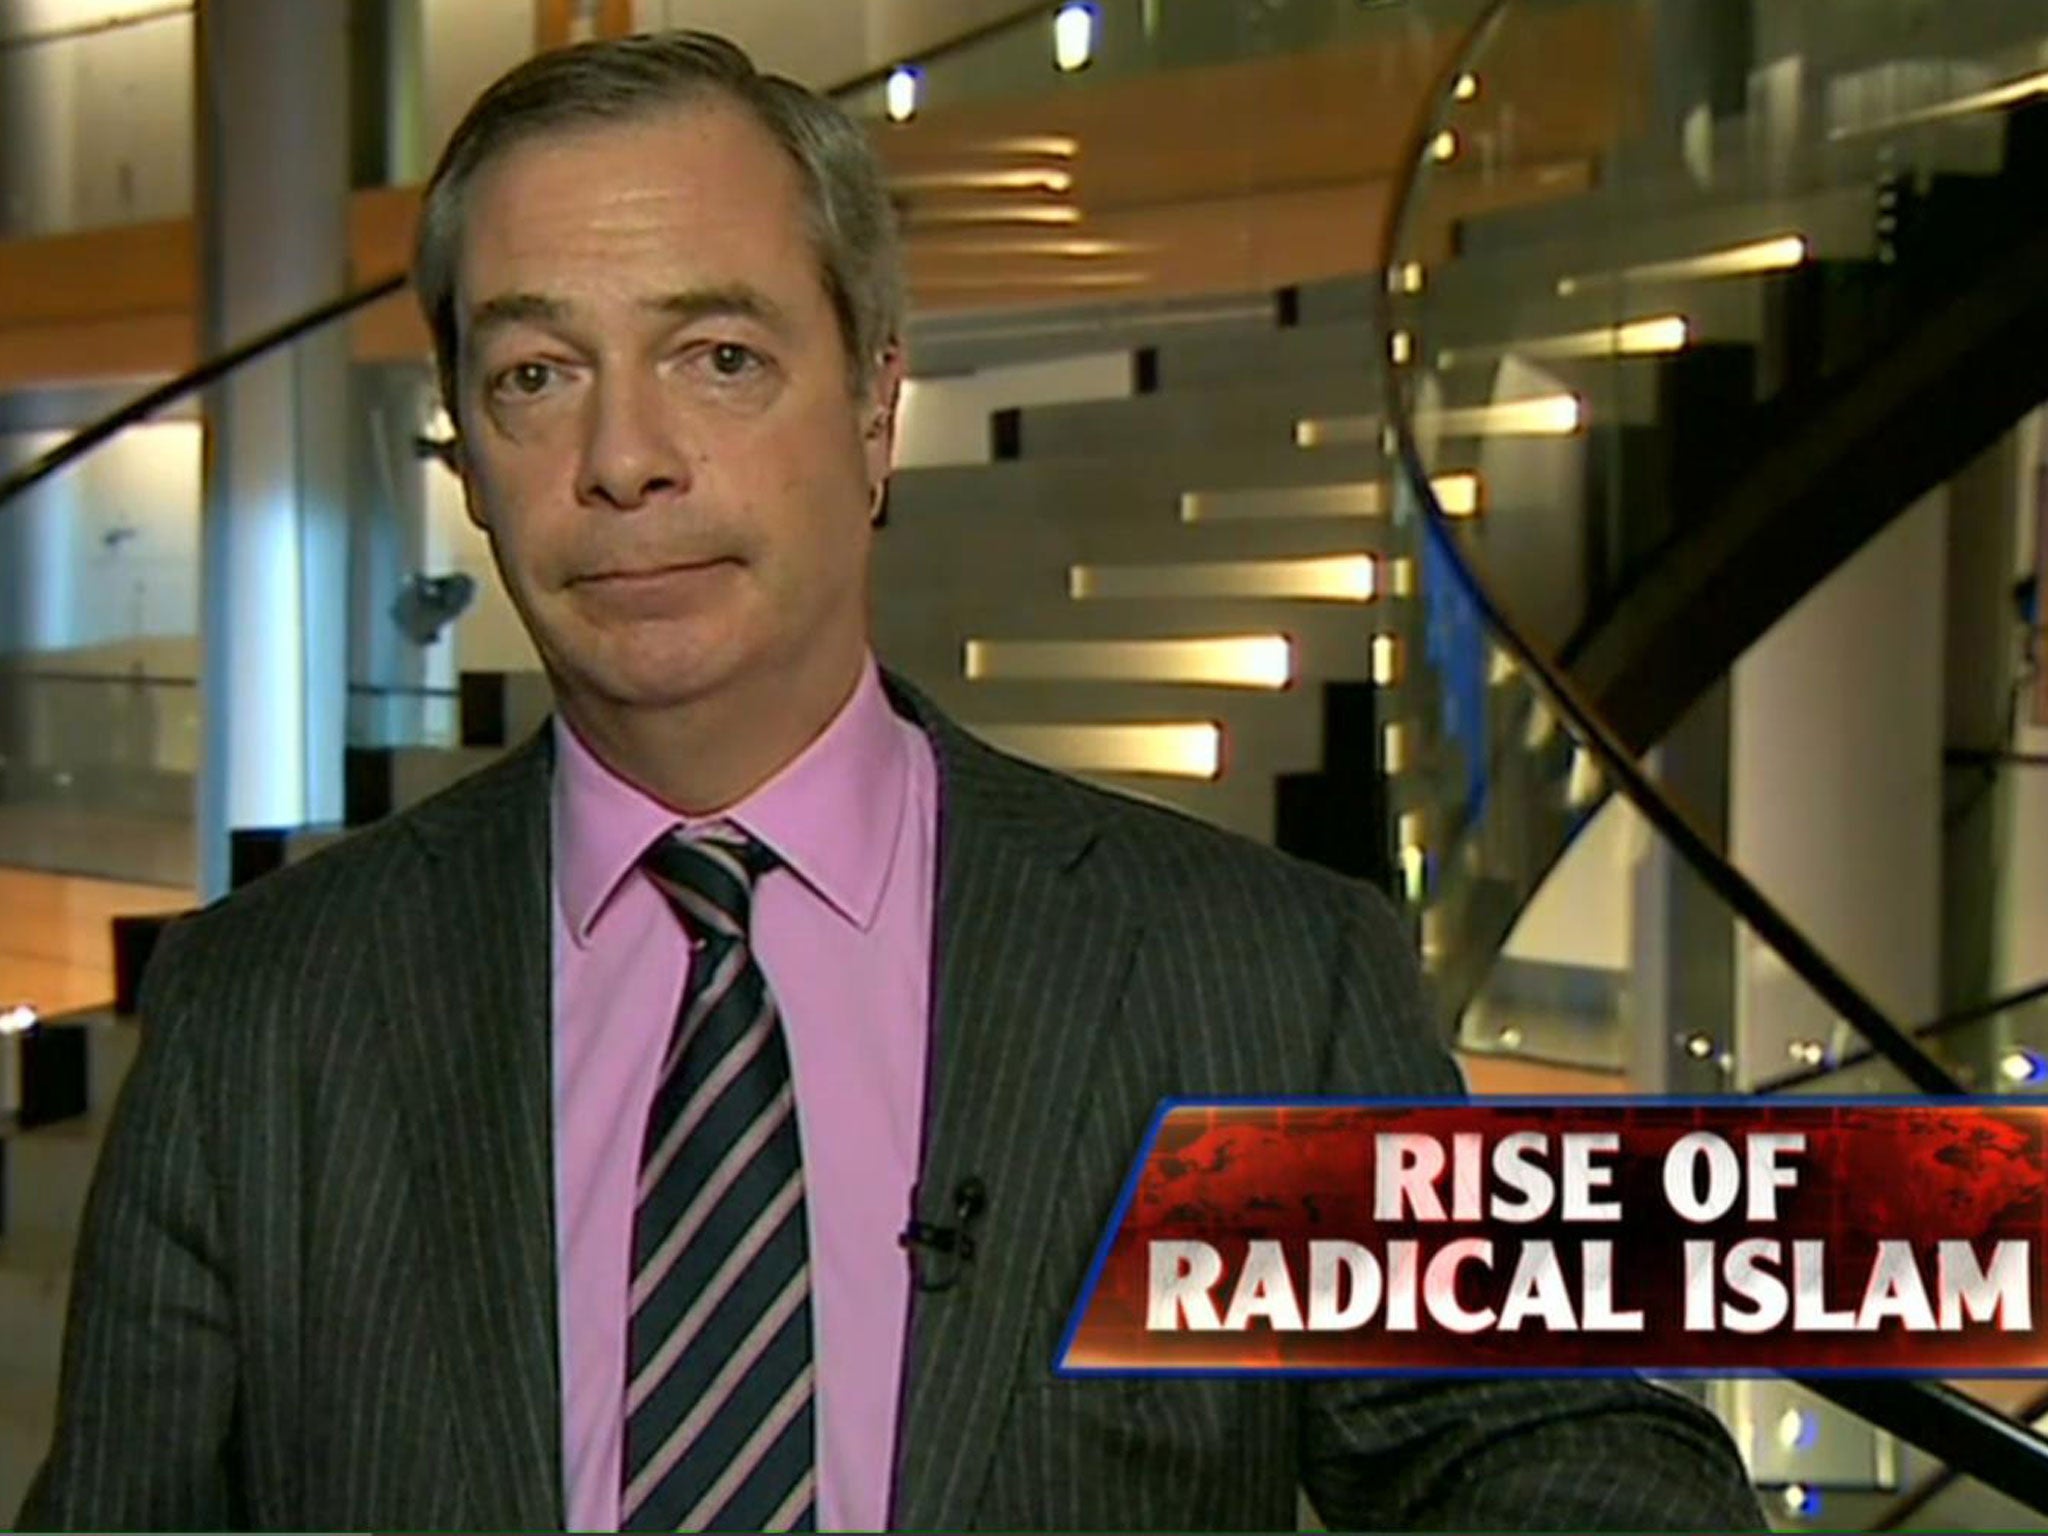 Nigel Farage appearing on Fox News